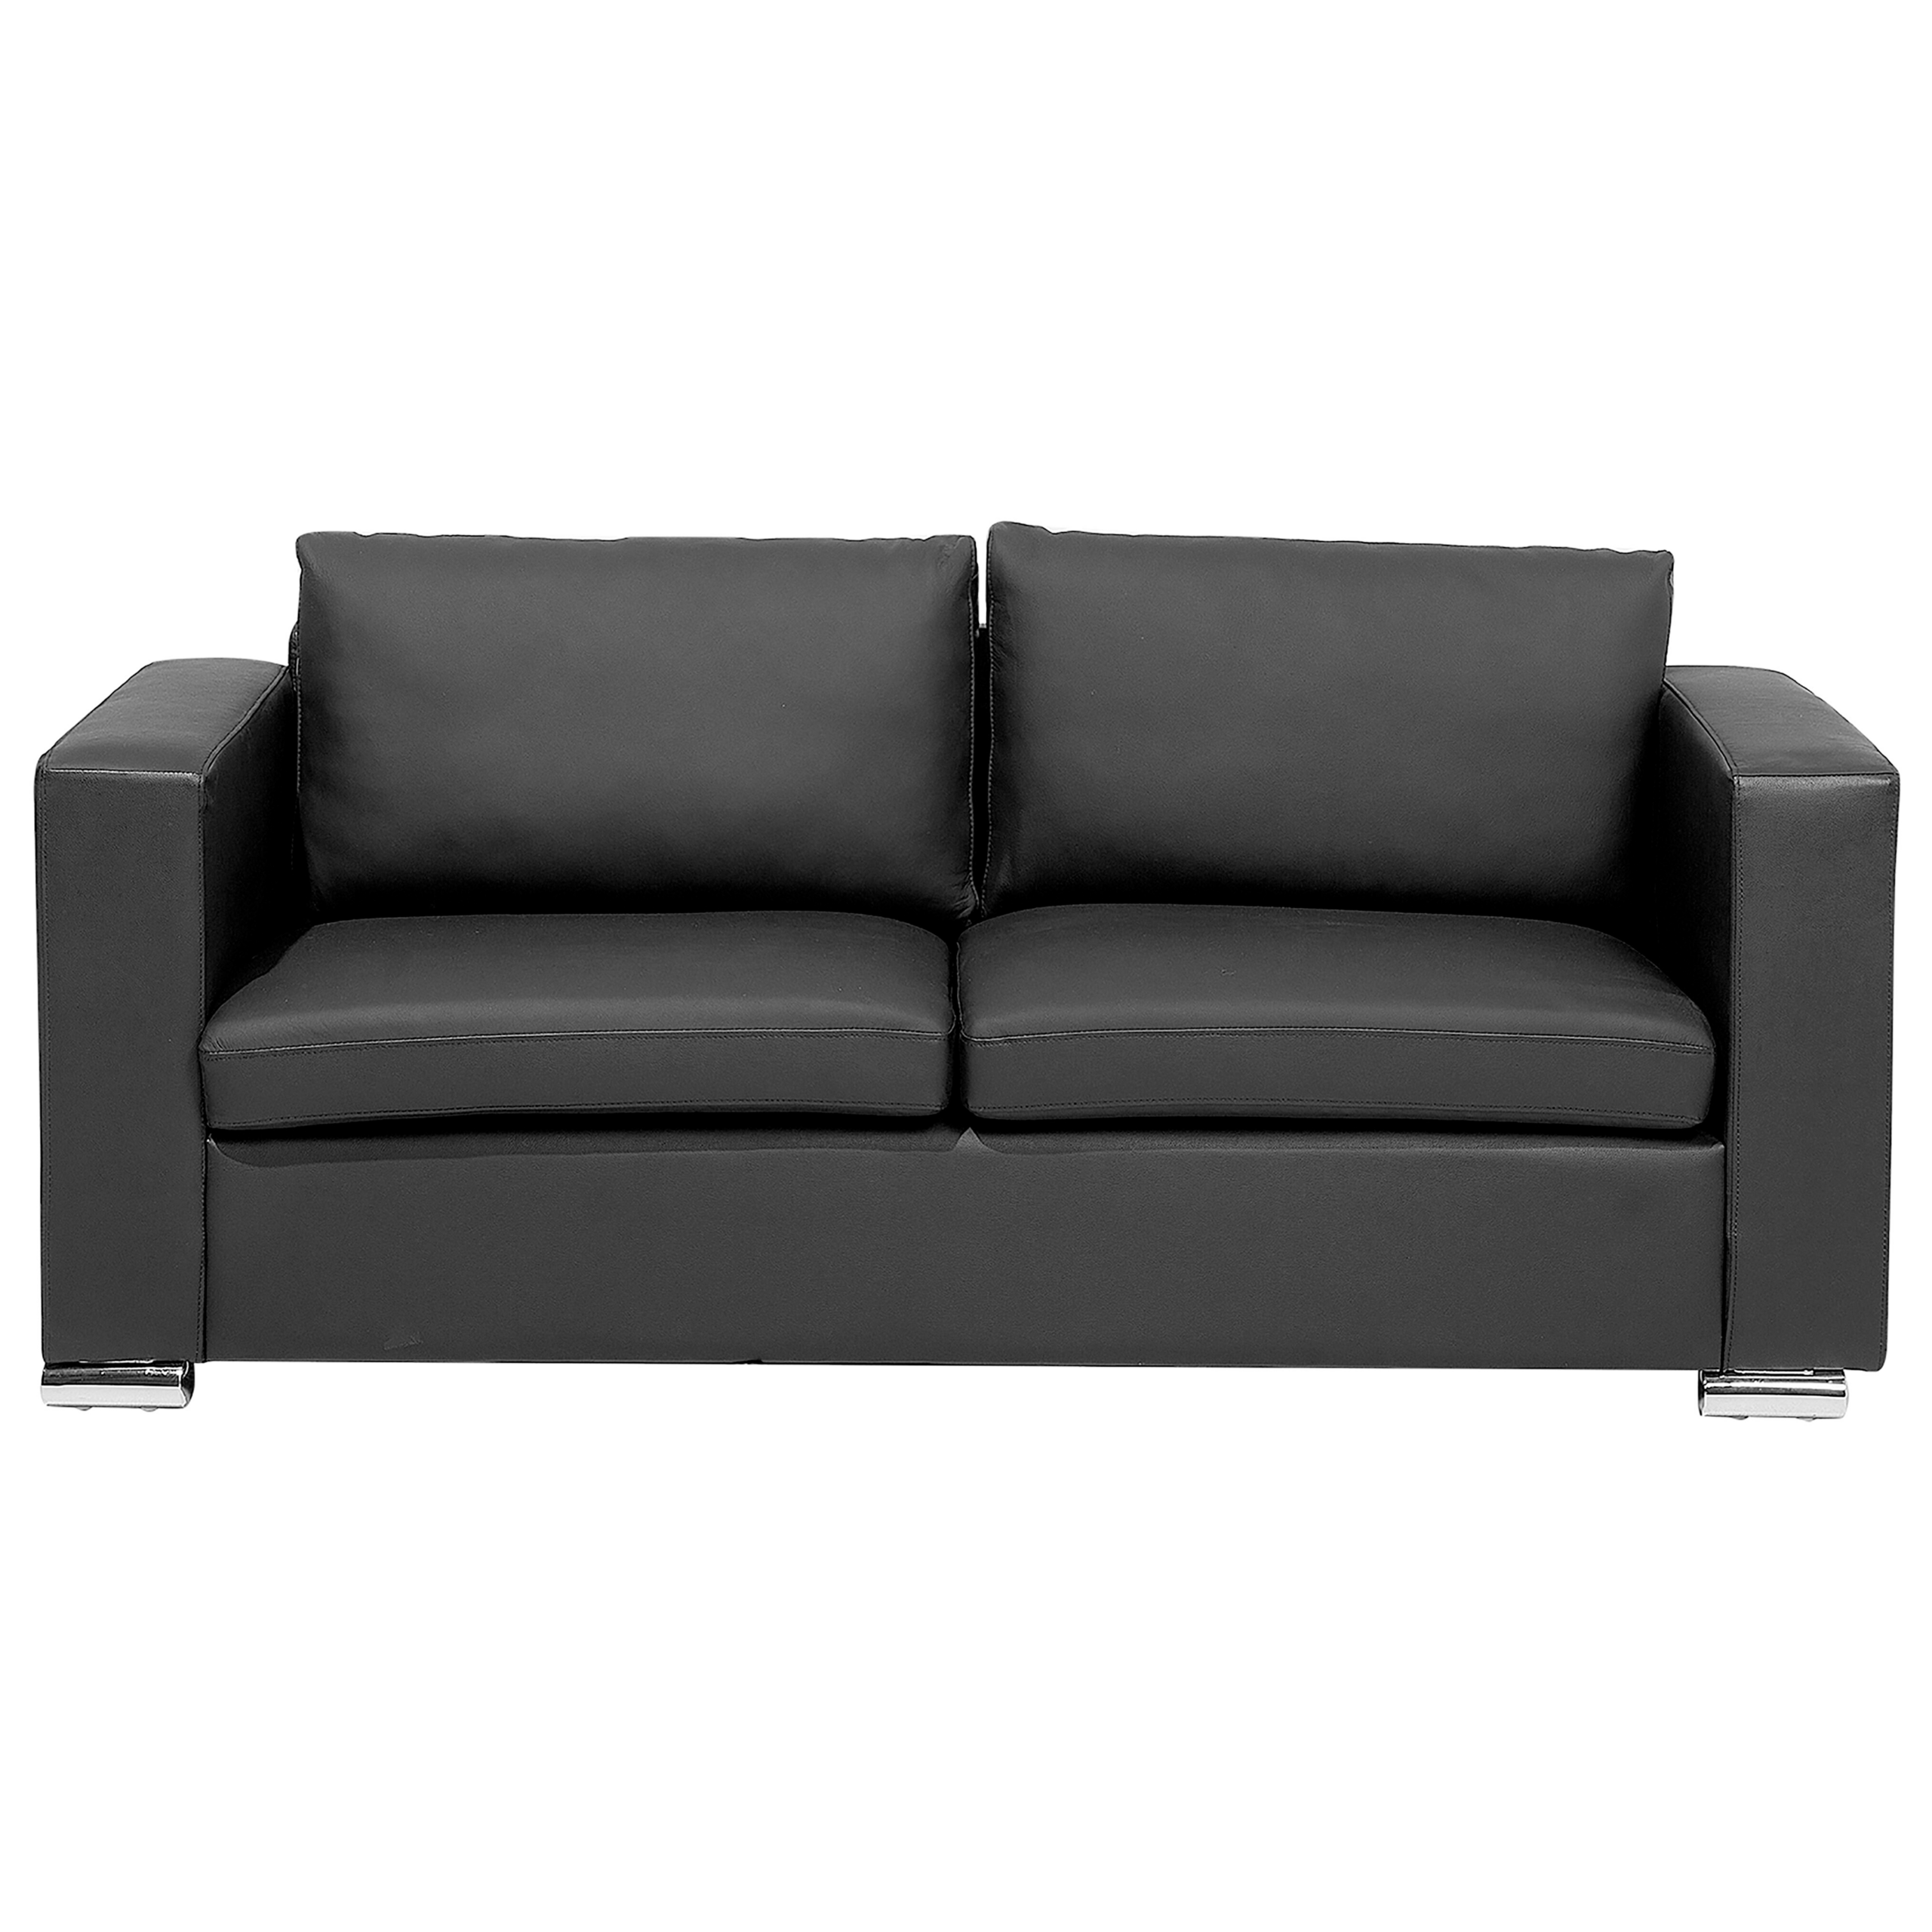 Beliani 3 Seater Sofa Black Genuine Leather Upholstery Chromed Legs Retro Design